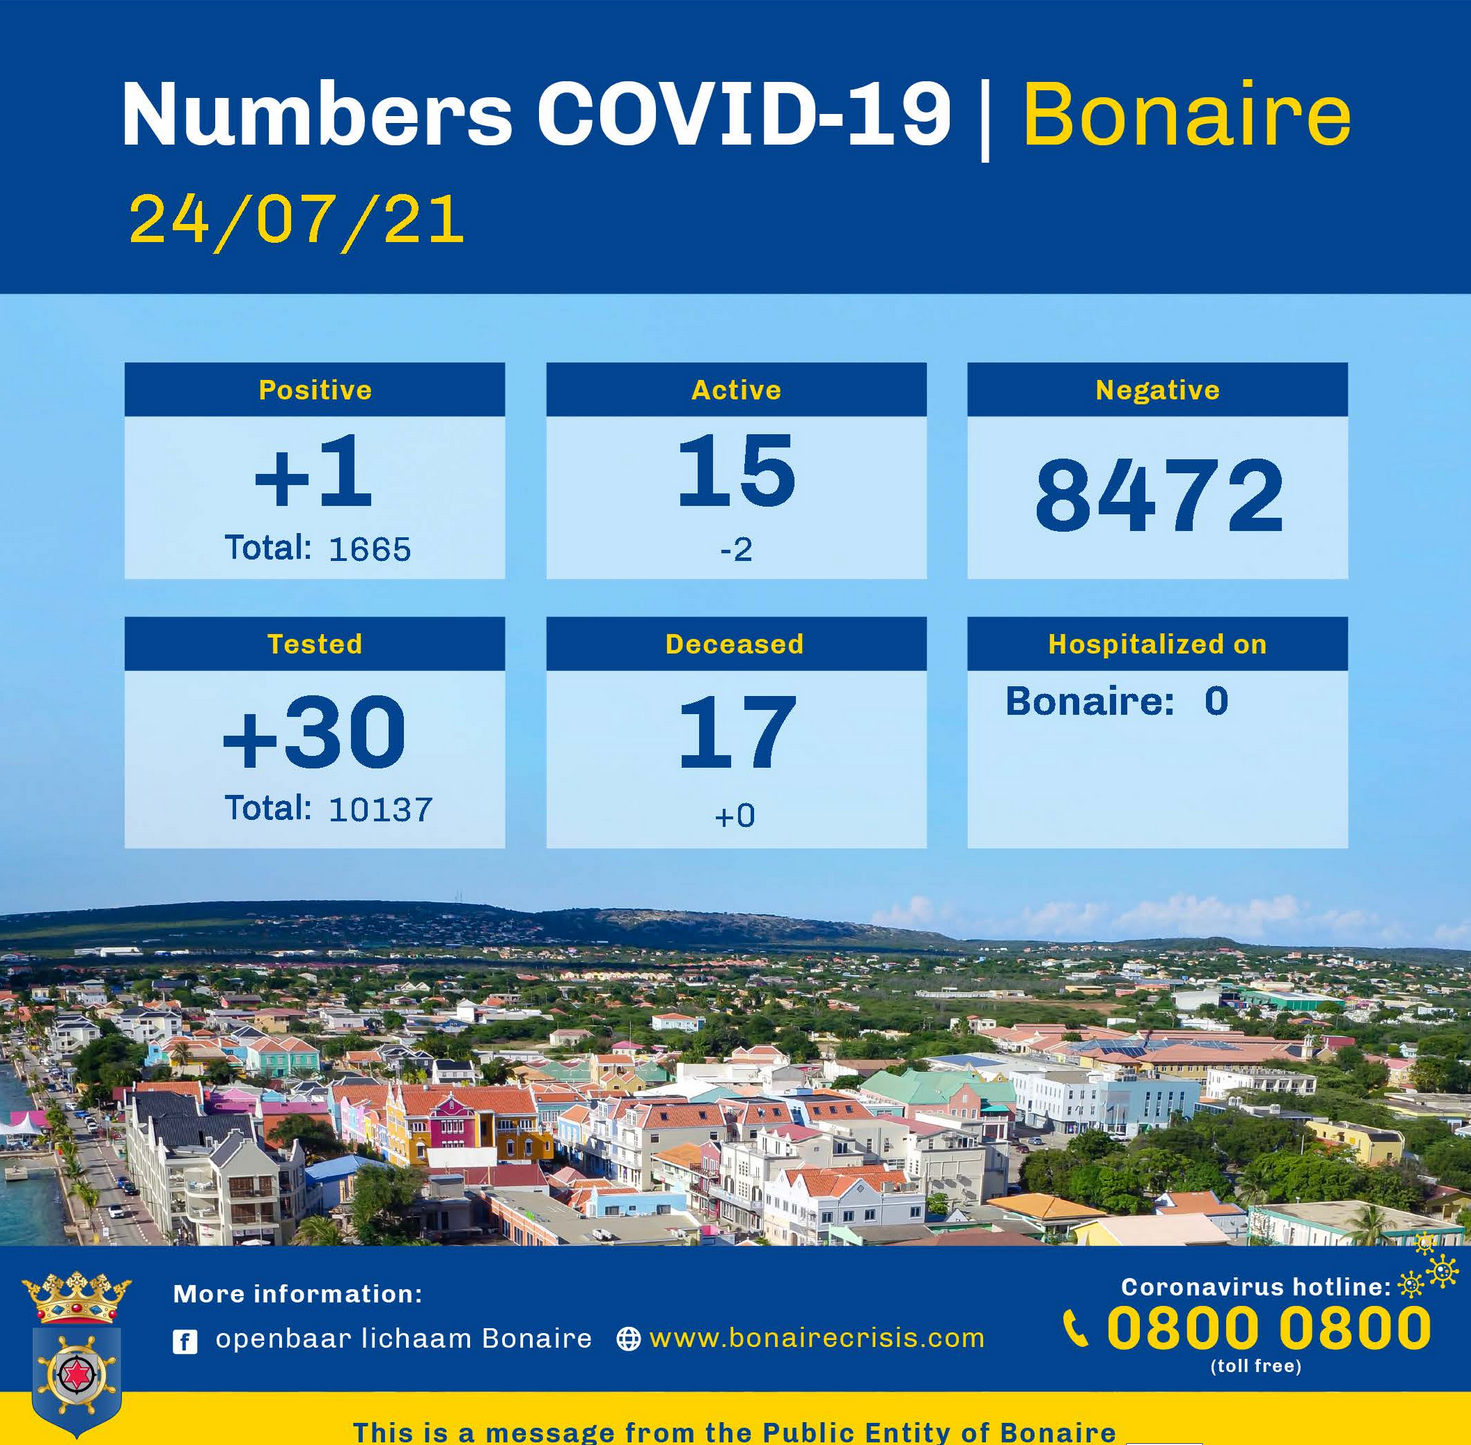 Covid-19 figures seem under control in Bonaire